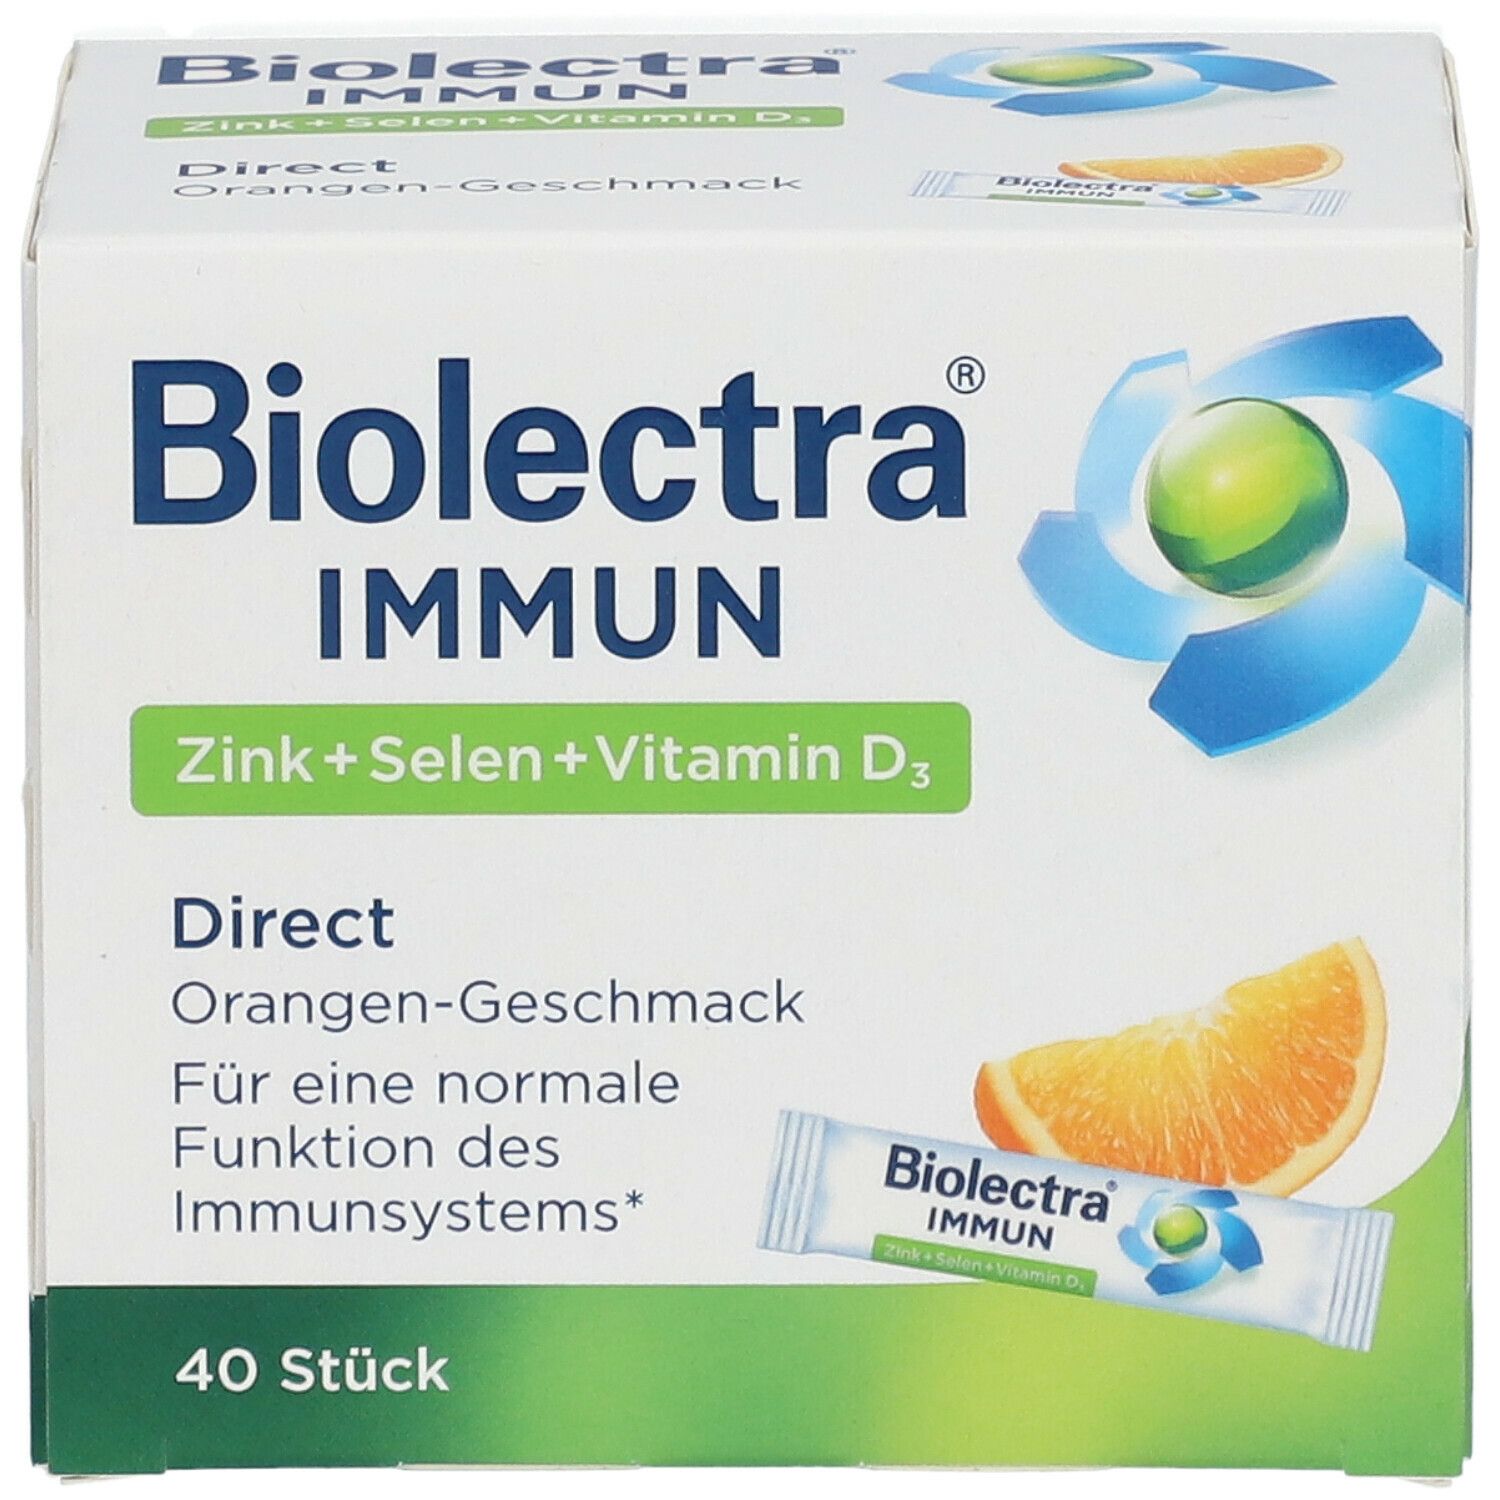 Biolectra® Immun Direct Orange